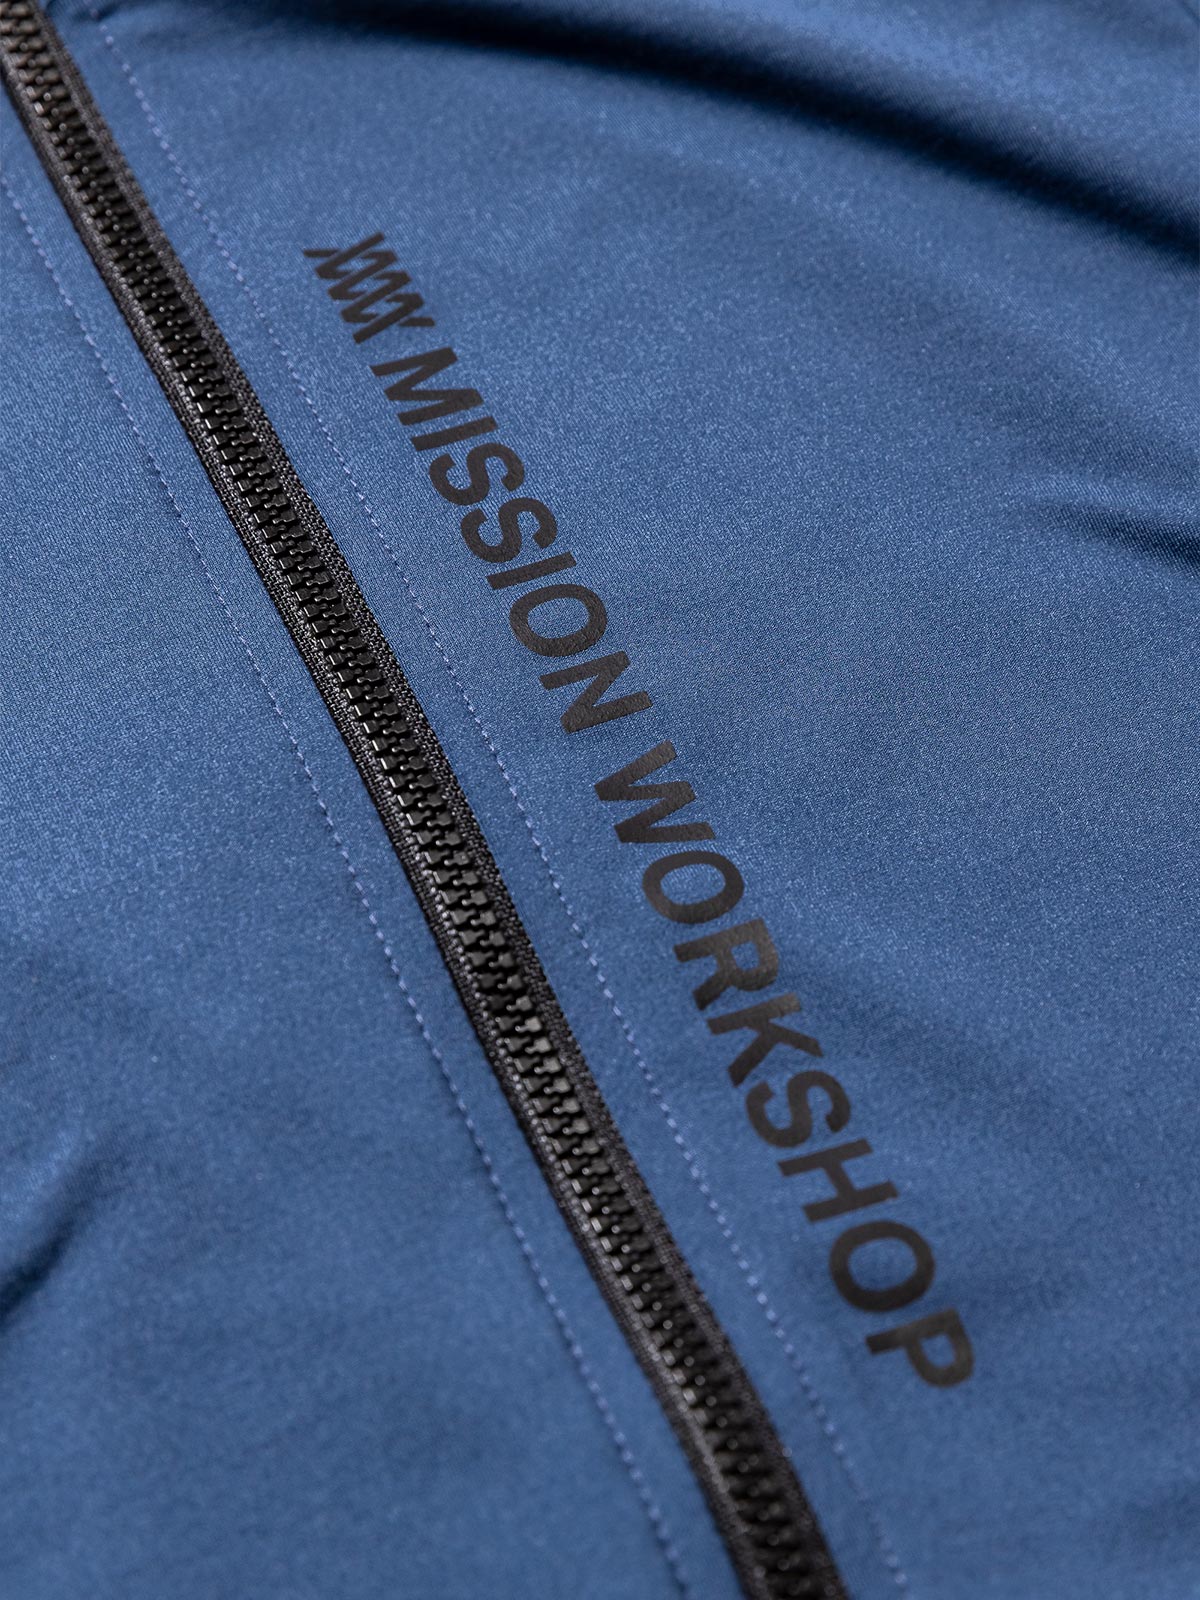 Mission Pro Jersey : LS Women's byMission Workshop - 耐候性バッグ＆テクニカルアパレル - サンフランシスコ＆ロサンゼルス - 耐久性に優れた作り - 永久保証